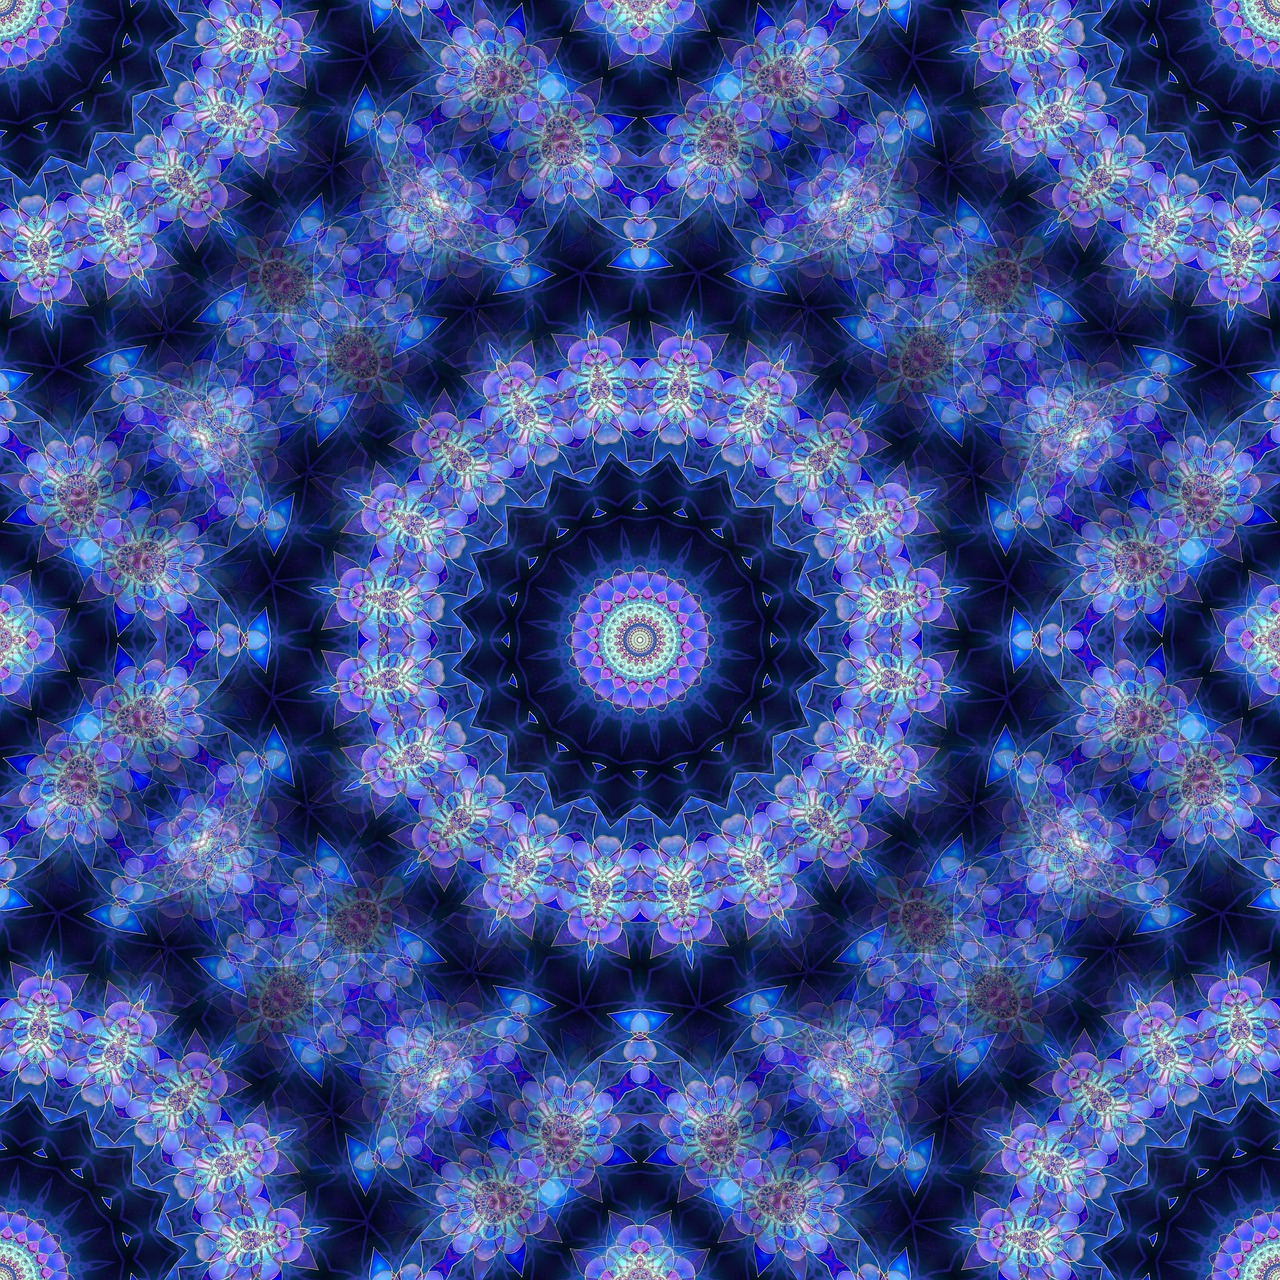 a blue and purple kaleite kaleite kaleite kaleite kaleite kaleite kaleite kaleite, a mosaic, by Daniel Chodowiecki, abstract illusionism, cymatics. auditory symbiogenesis, repeating pattern, galactic dreamcatchers, digital art - w 640